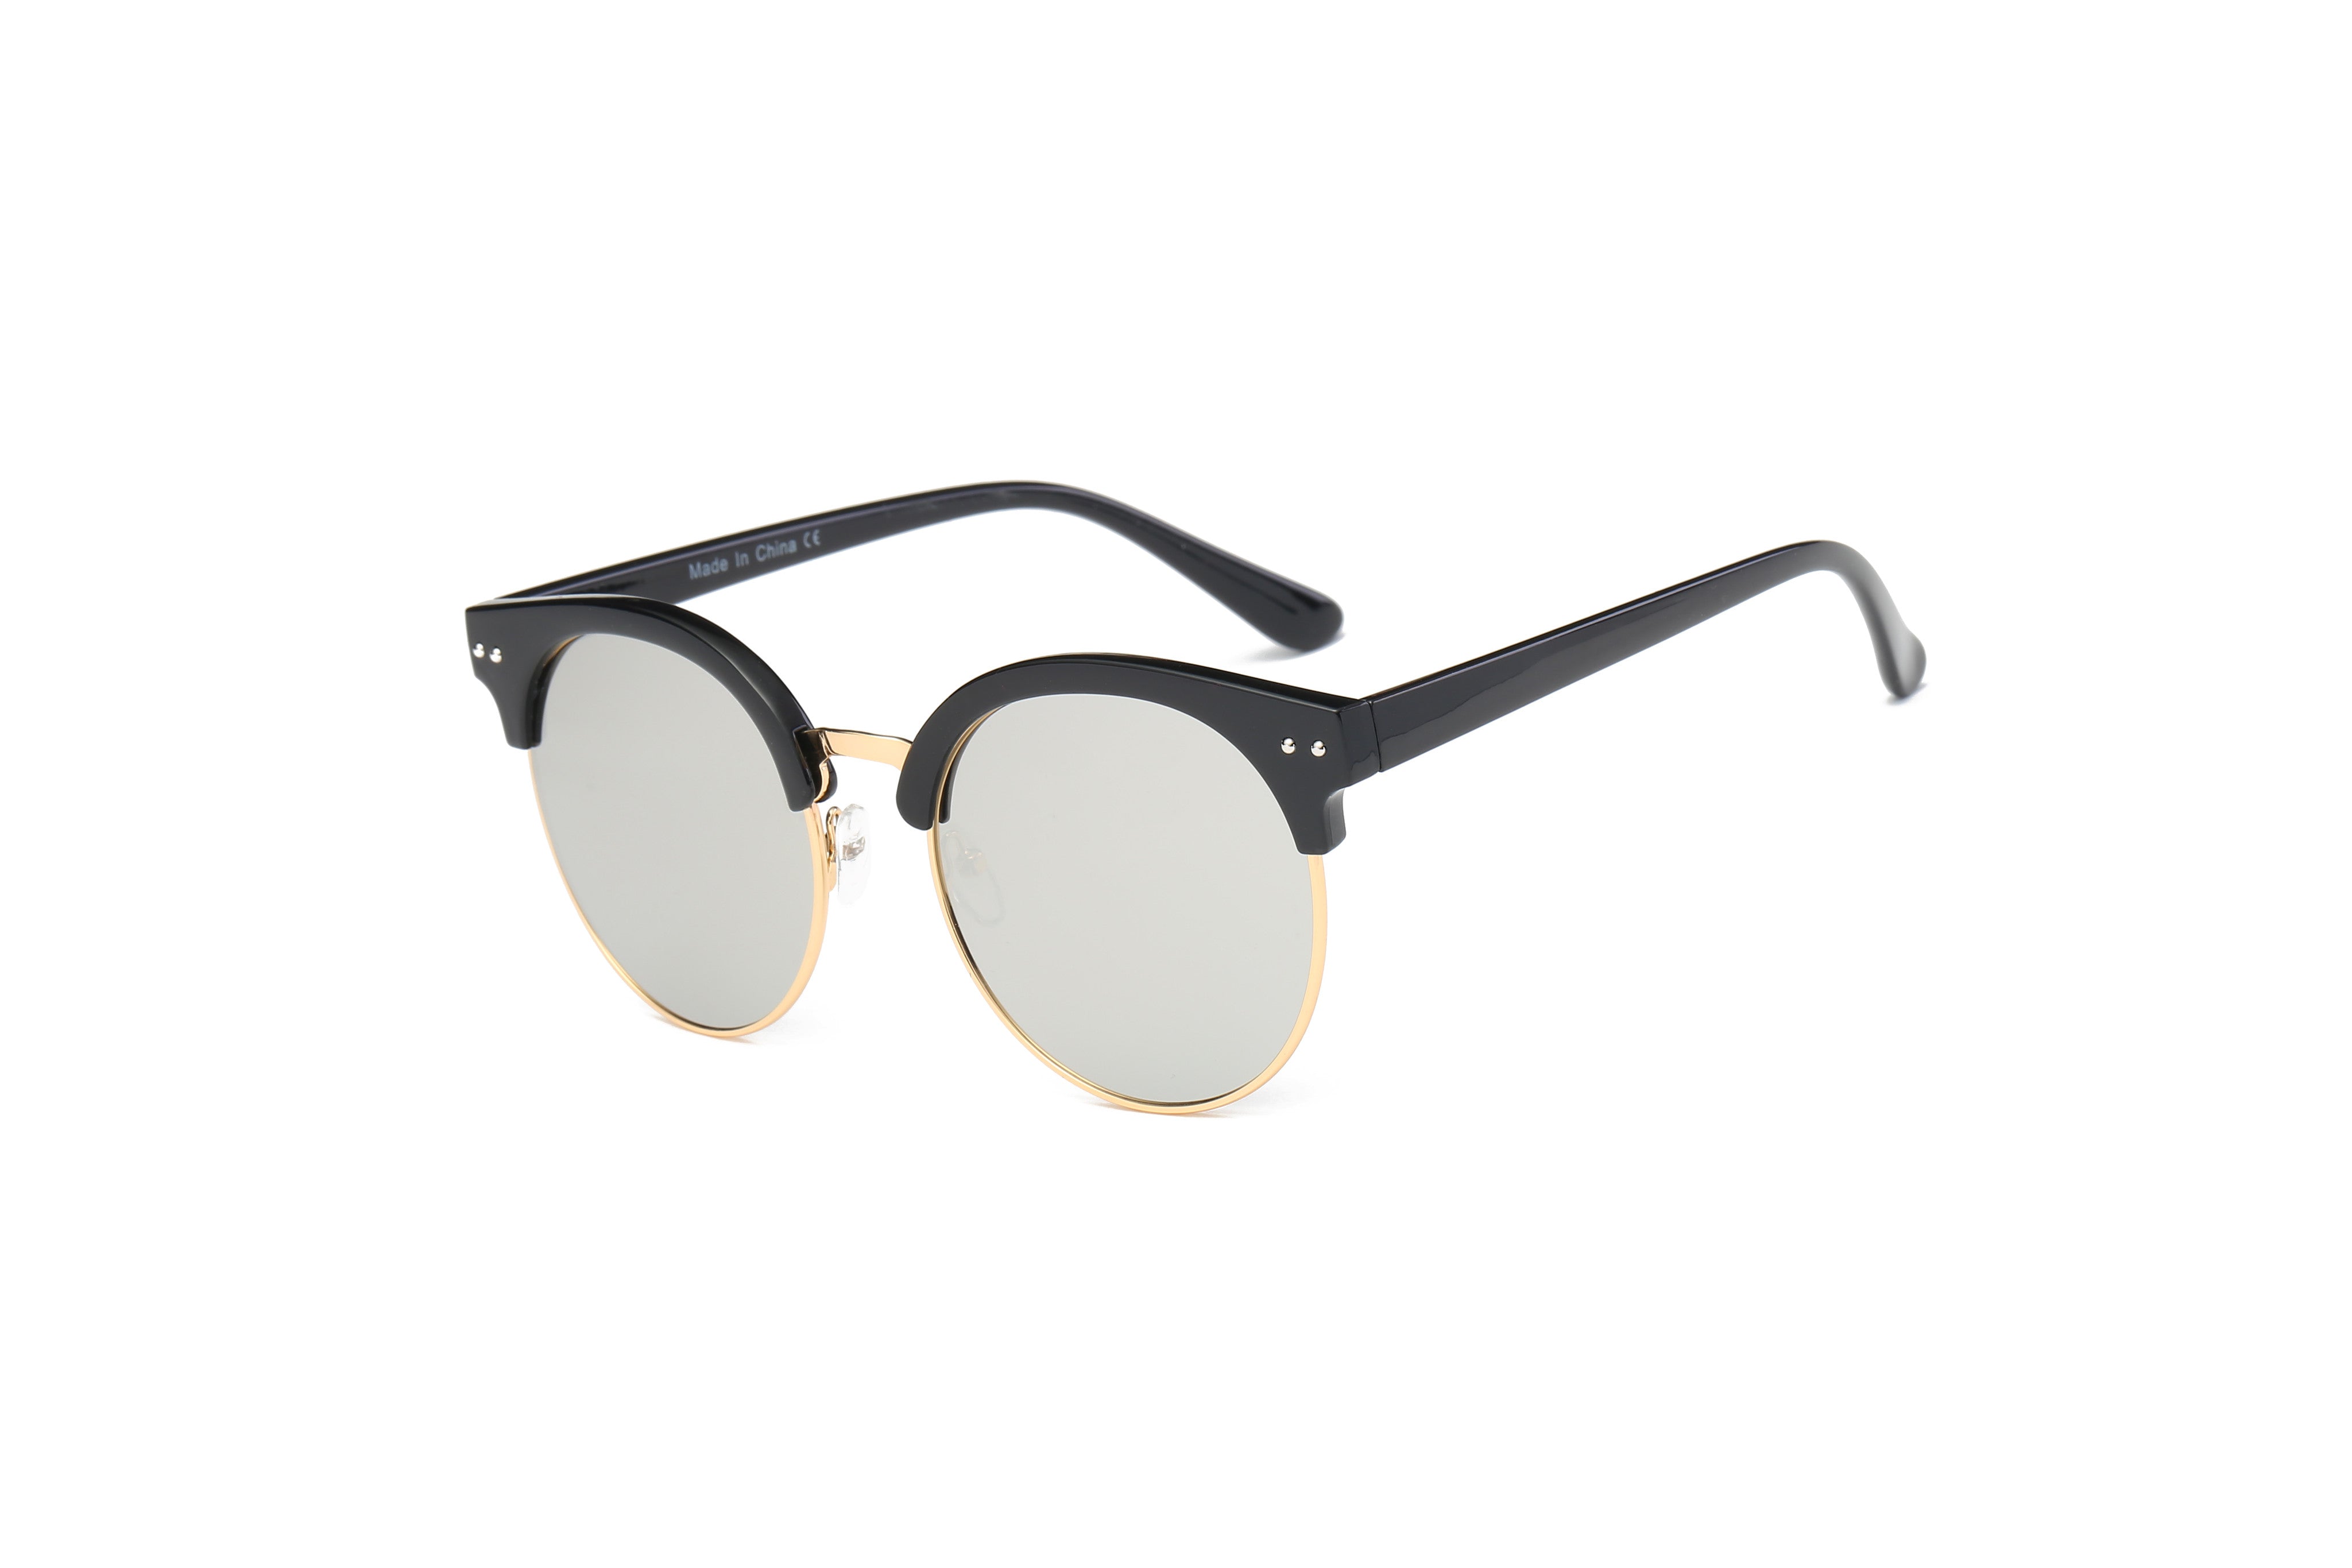 D66 - Retro Fashion Round Clubmaster Flat Lens Sunglasses Black FRAME - Silver Lens